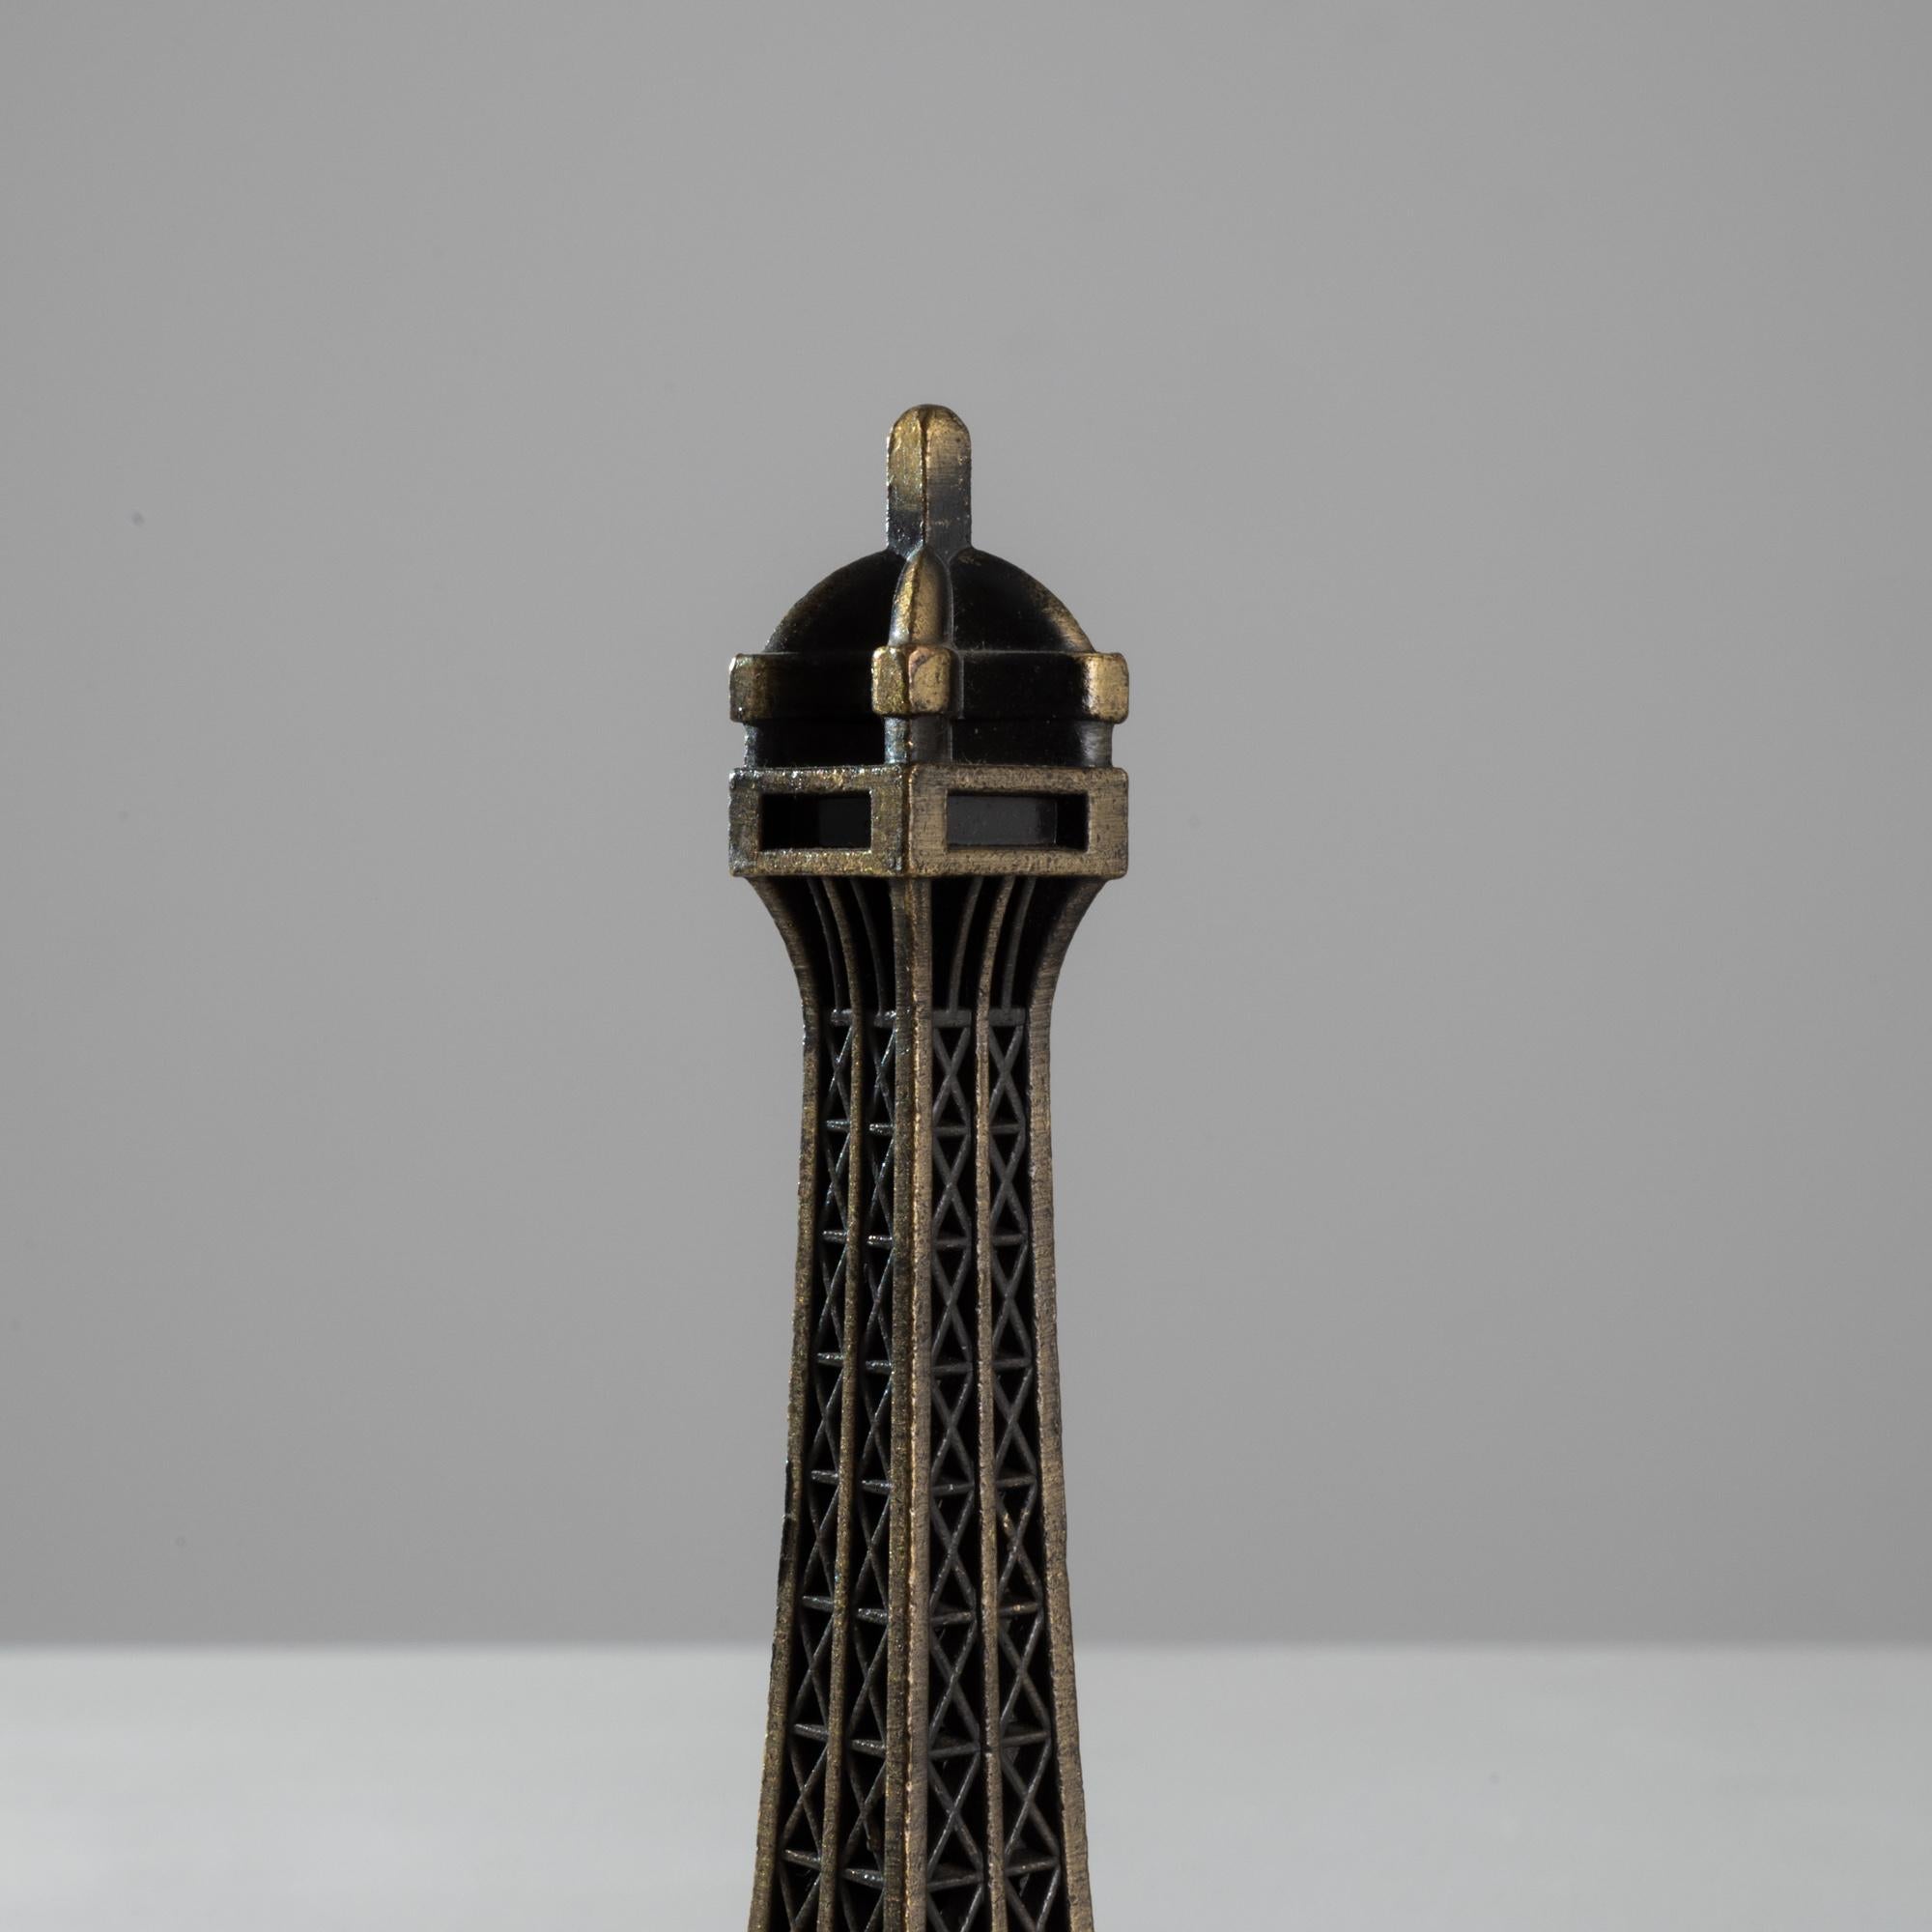 eiffel tower made of toothpicks